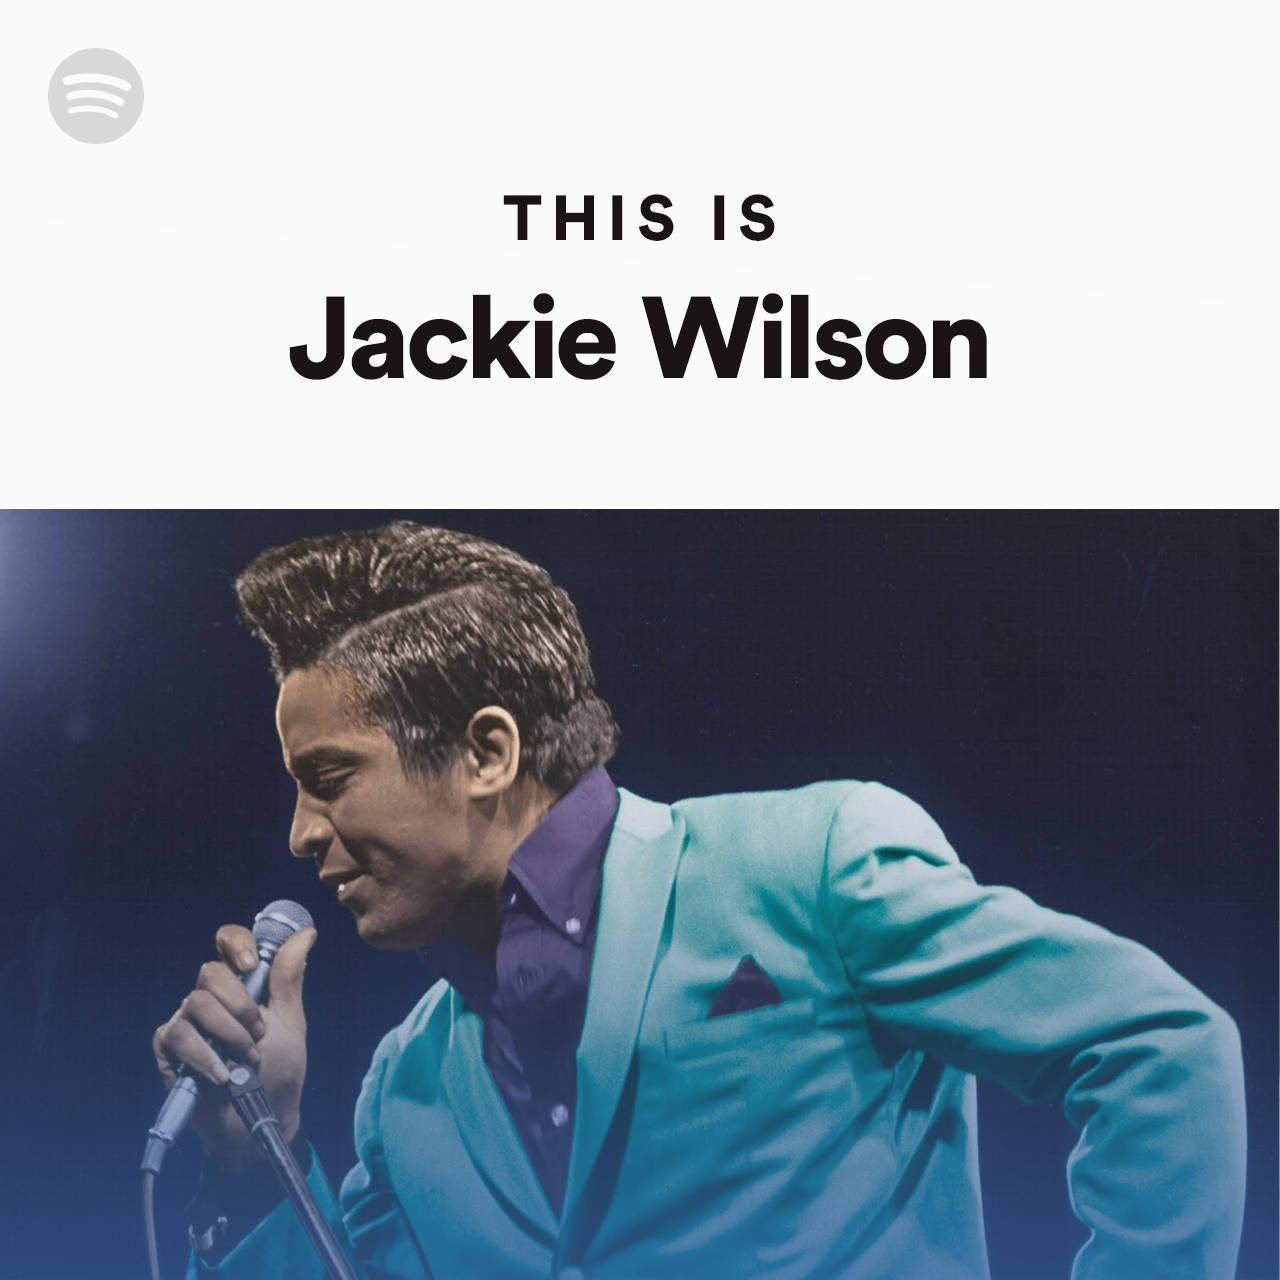 Jackiewilson Cantante Estadounidense Portada De La Lista De Reproducción De Spotify Fondo de pantalla